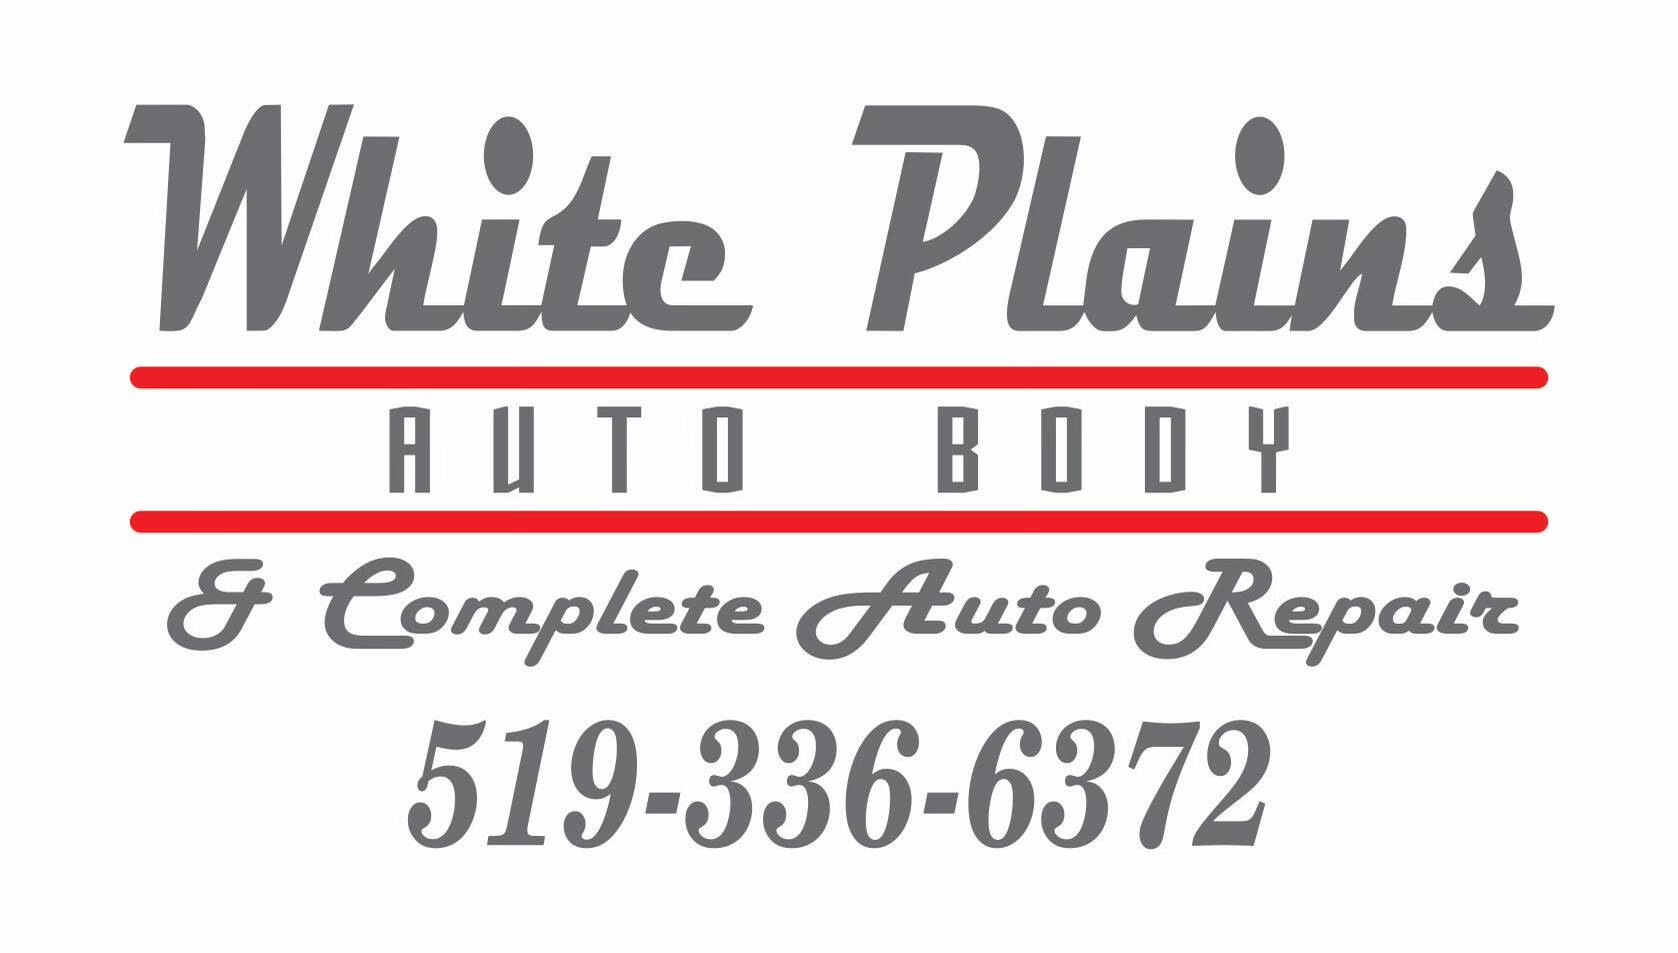 White Plains Auto Body & Complete Auto Repair